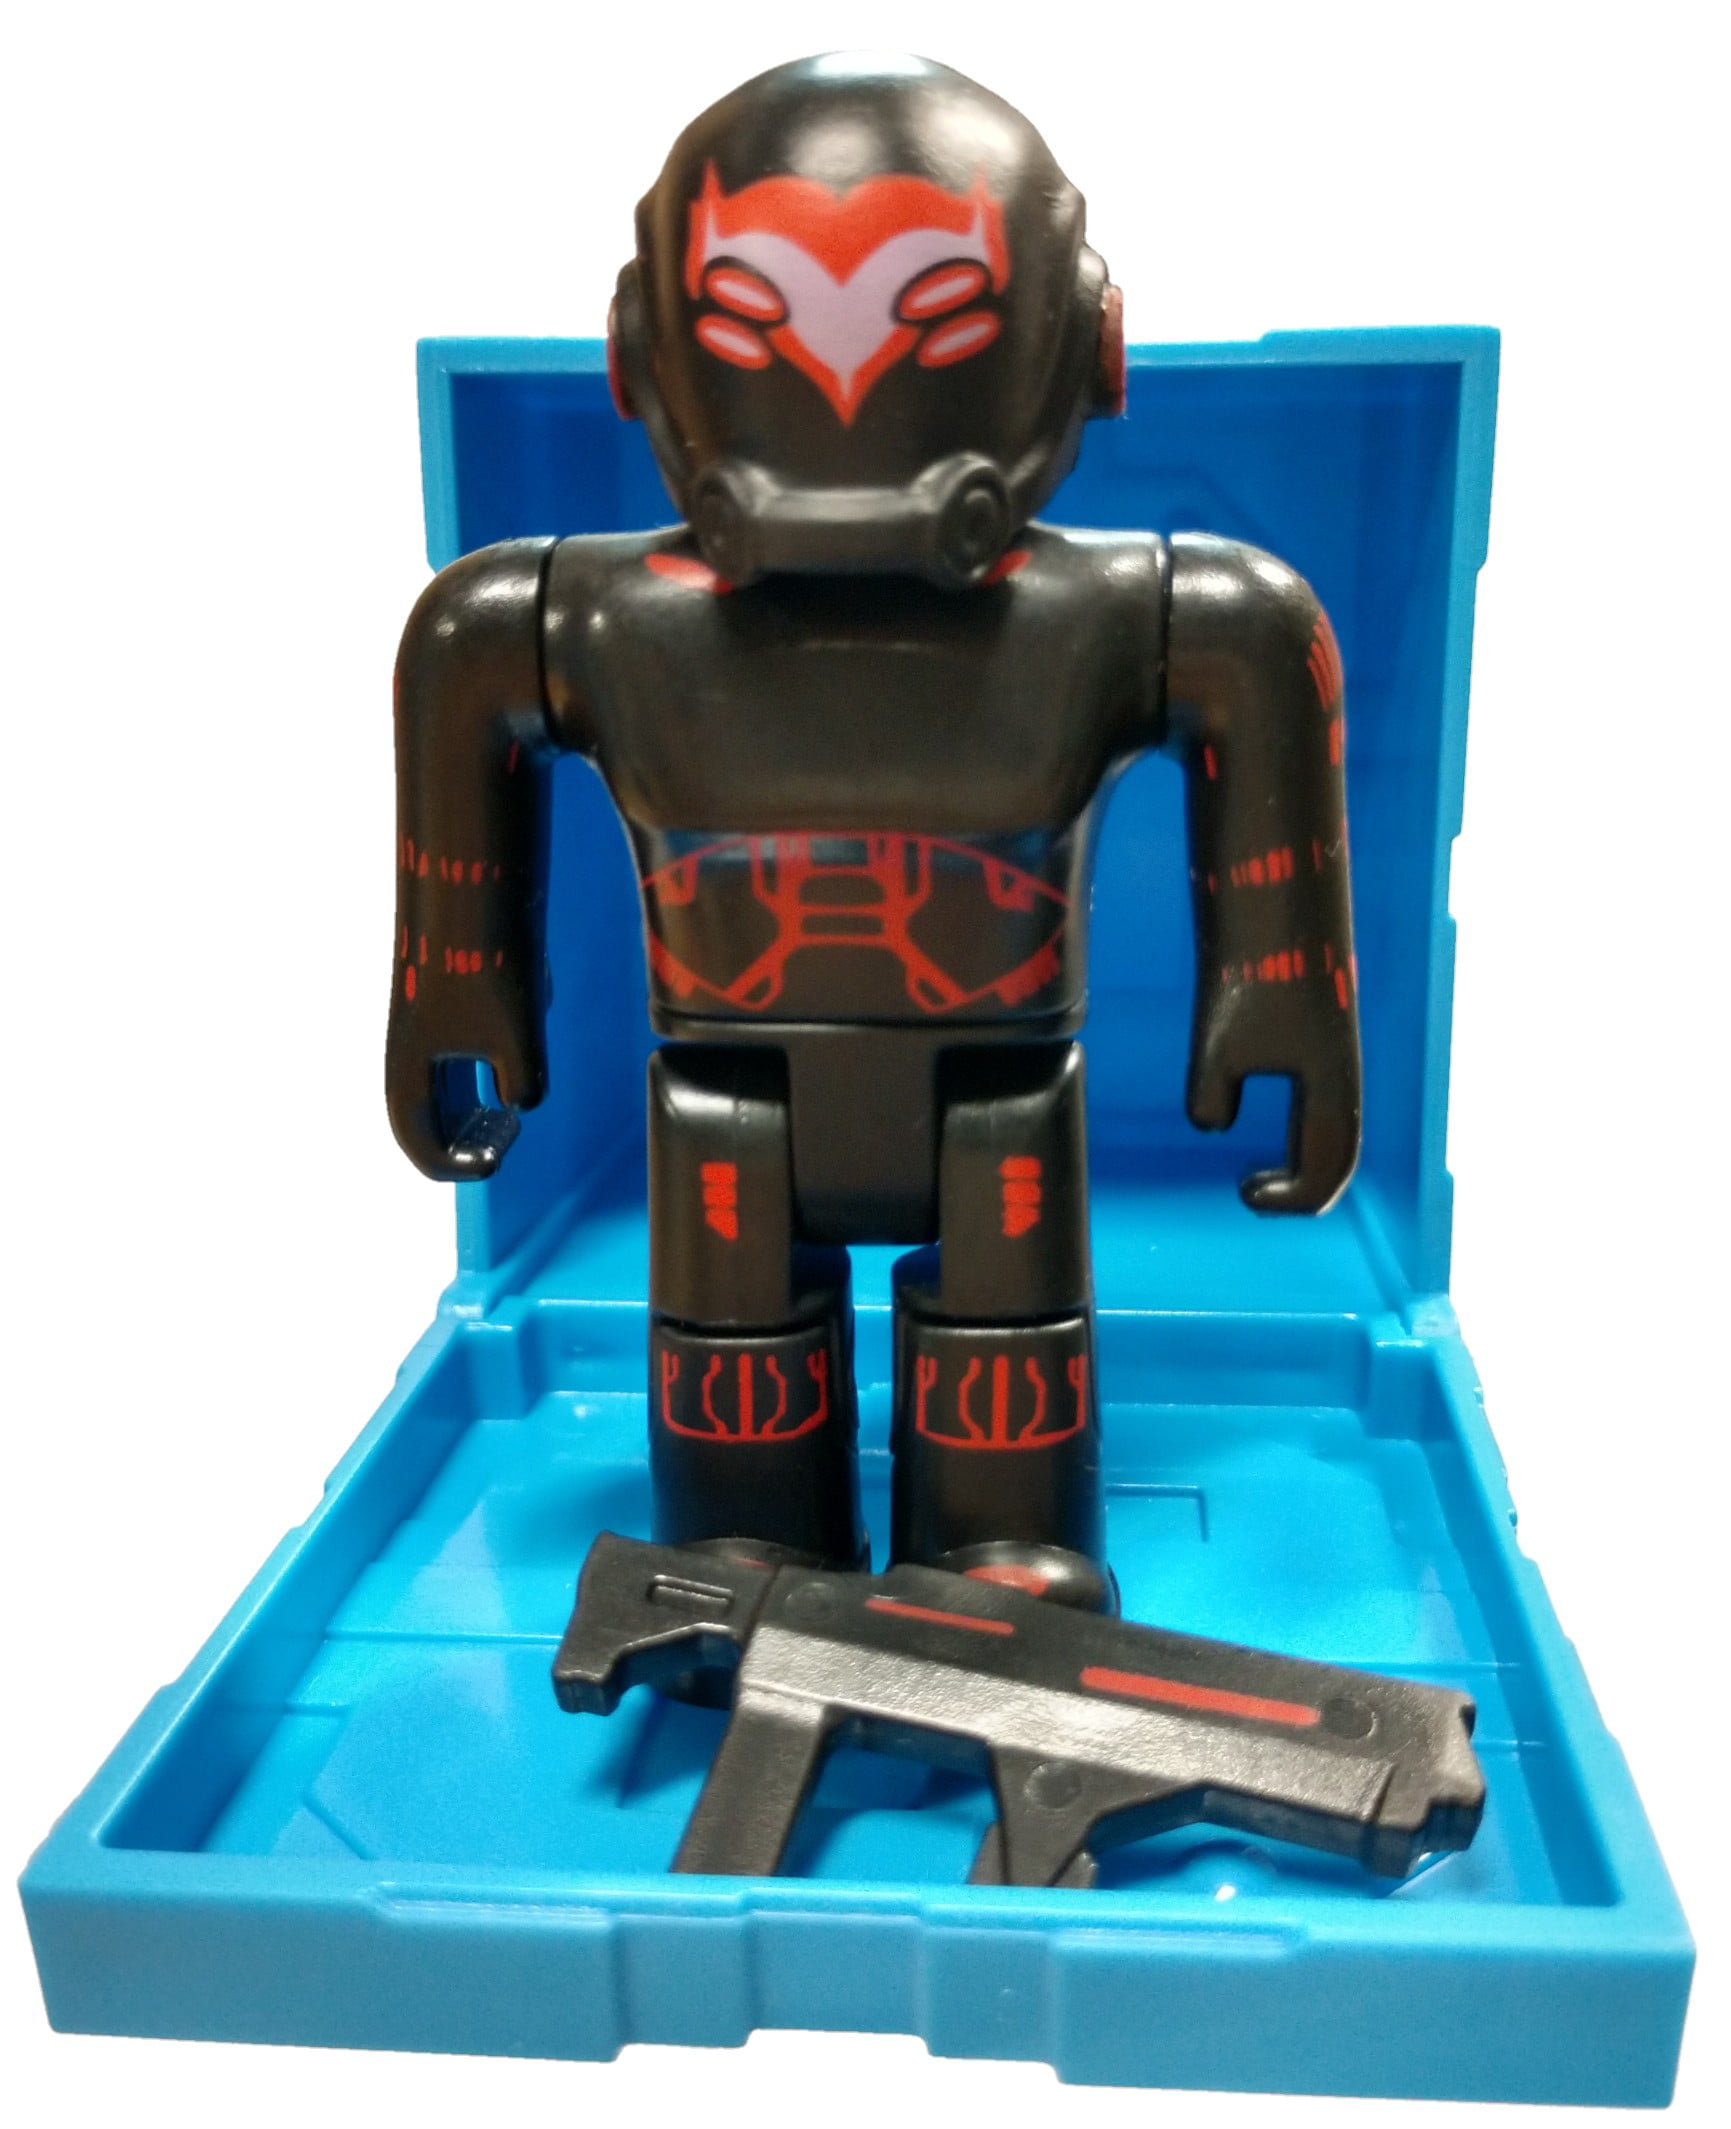 Roblox Series 9 Egg Hunt Commando Mini Figure With Cube And Online Code No Packaging Walmart Com Walmart Com